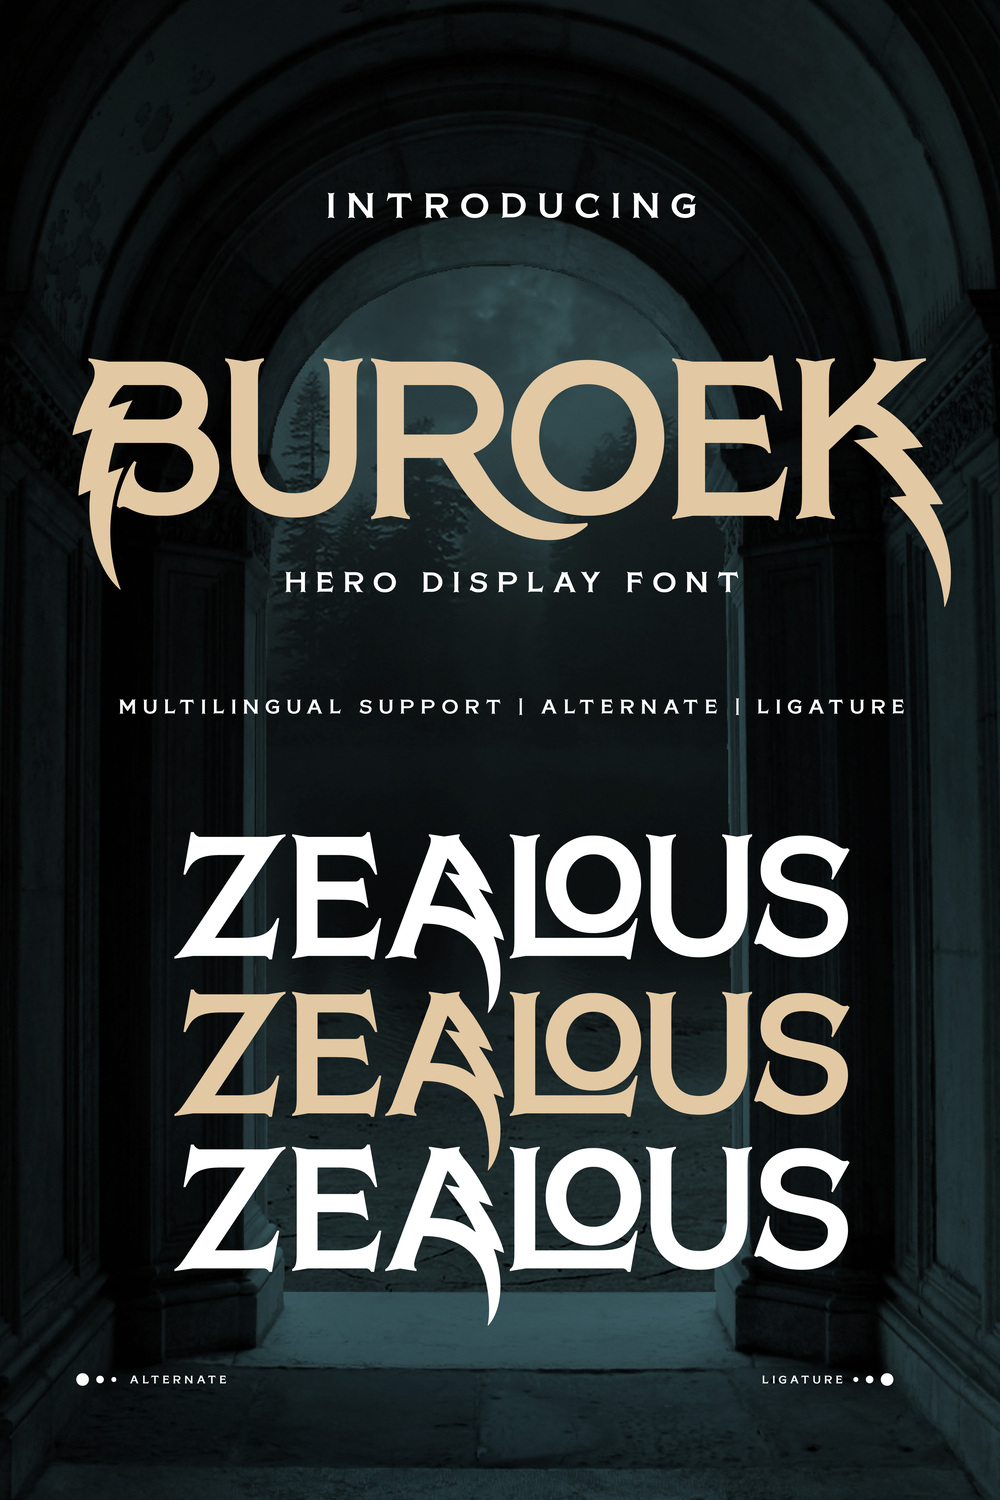 Buroek | Display Hero Font pinterest preview image.